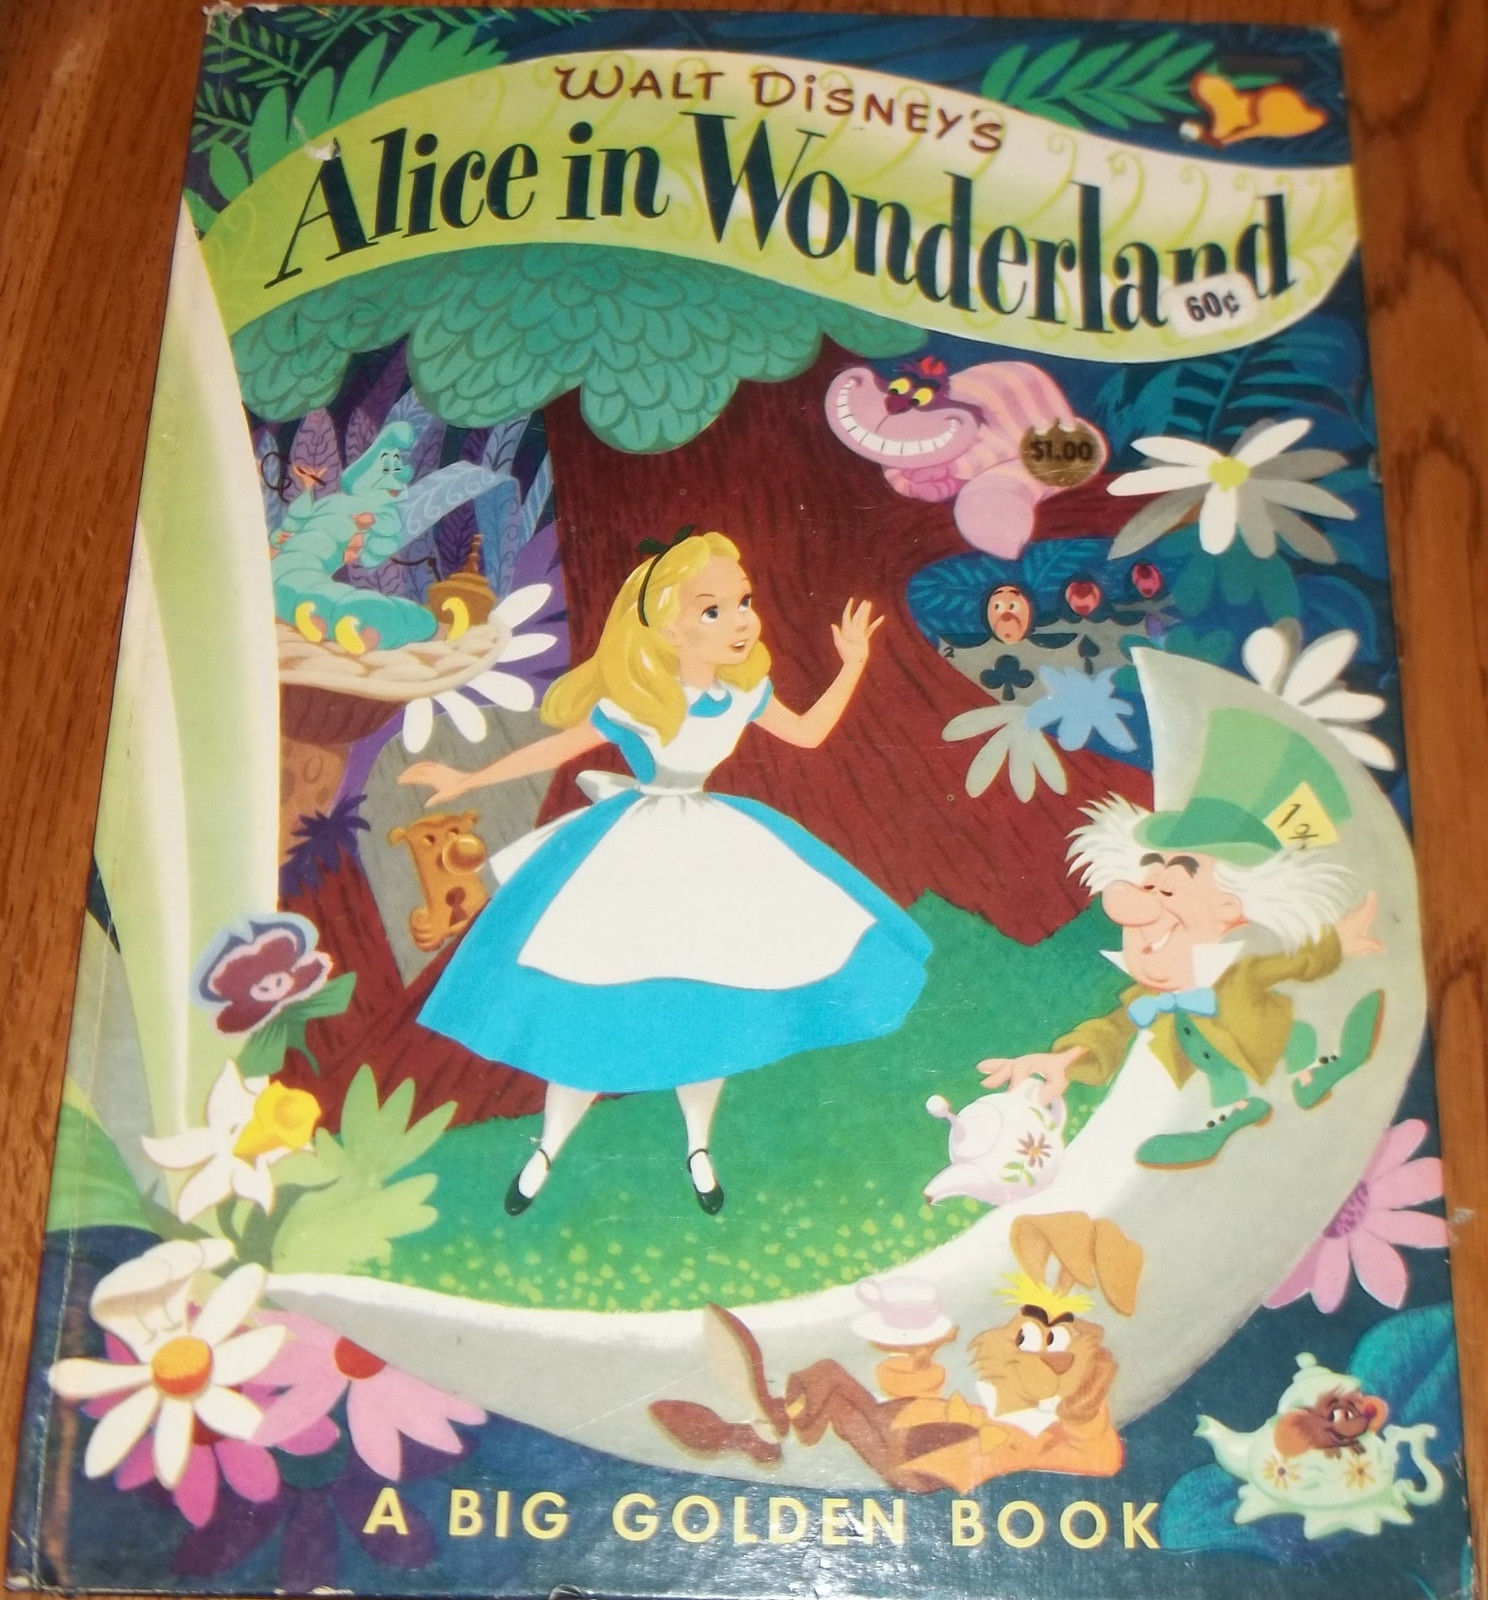 https://static.wikia.nocookie.net/disney/images/b/bc/Alice_in_wonderland_big_golden_book.JPG/revision/latest?cb=20131214005111